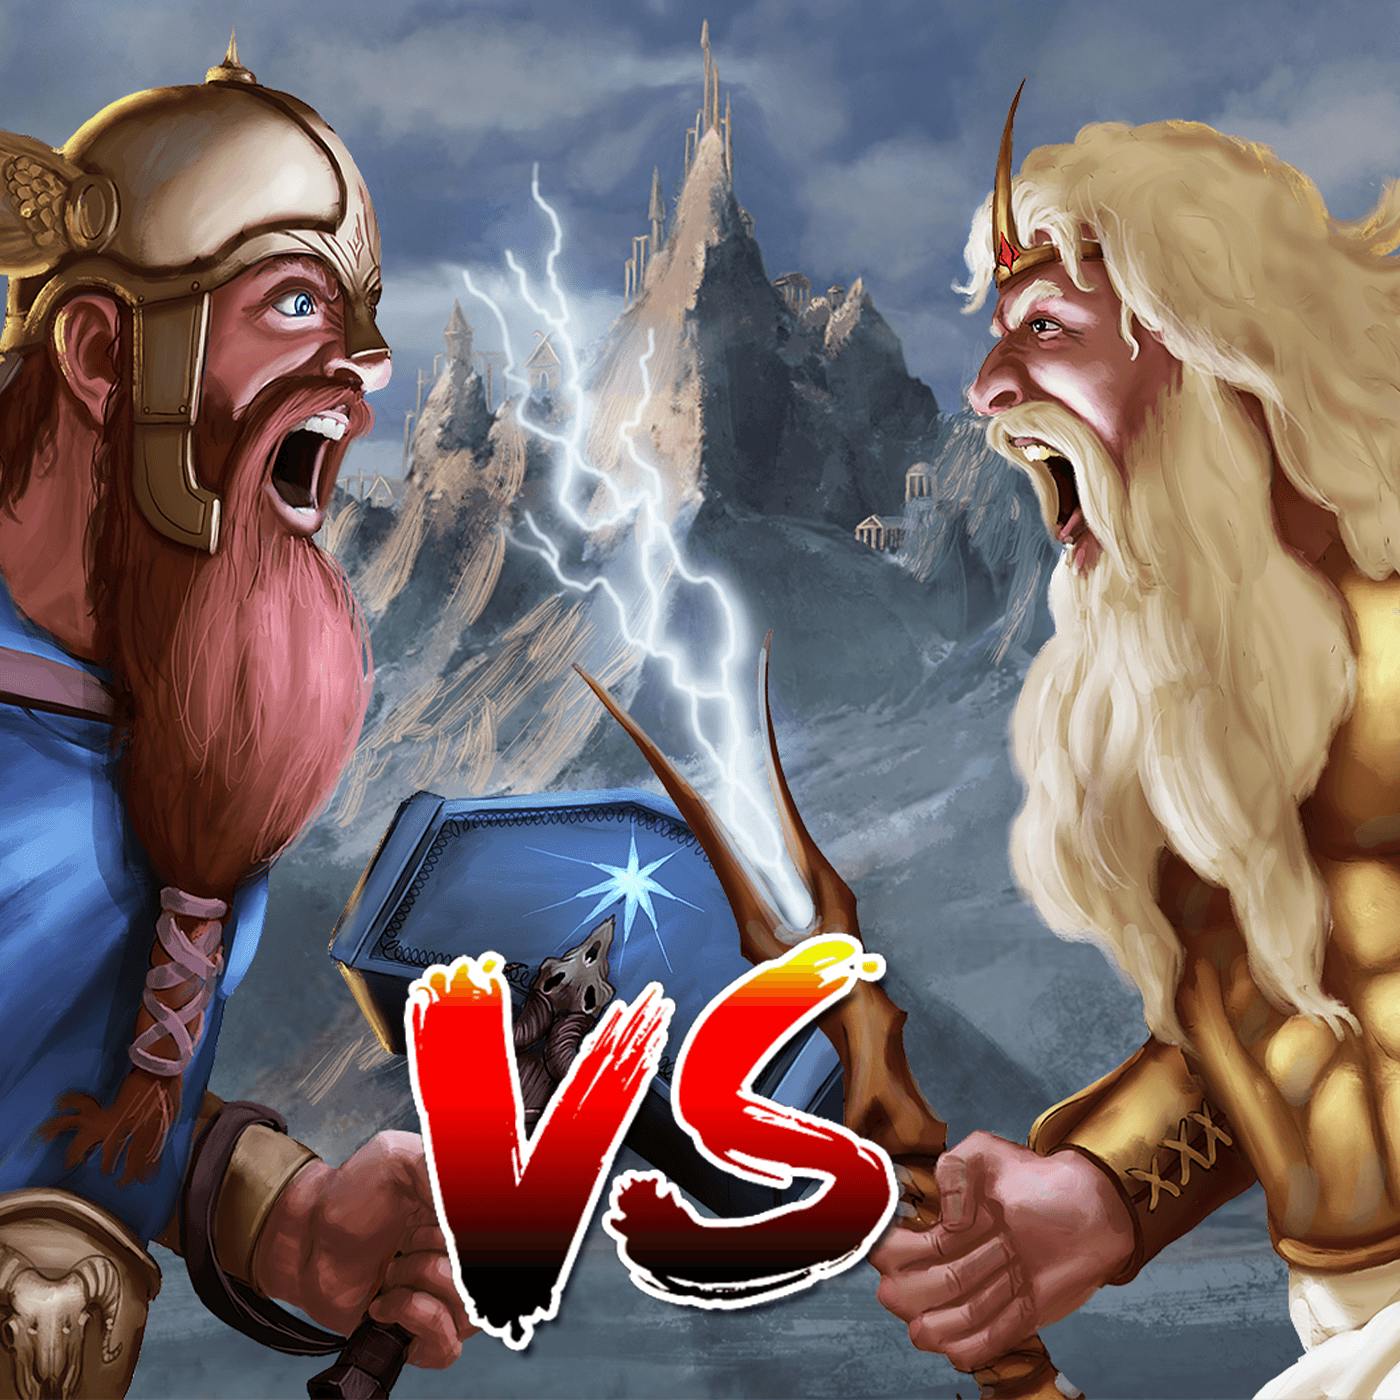 Episode 46: Zeus vs Thor | Who is the True Lord of Thunder? (Mythological Battle Royale)